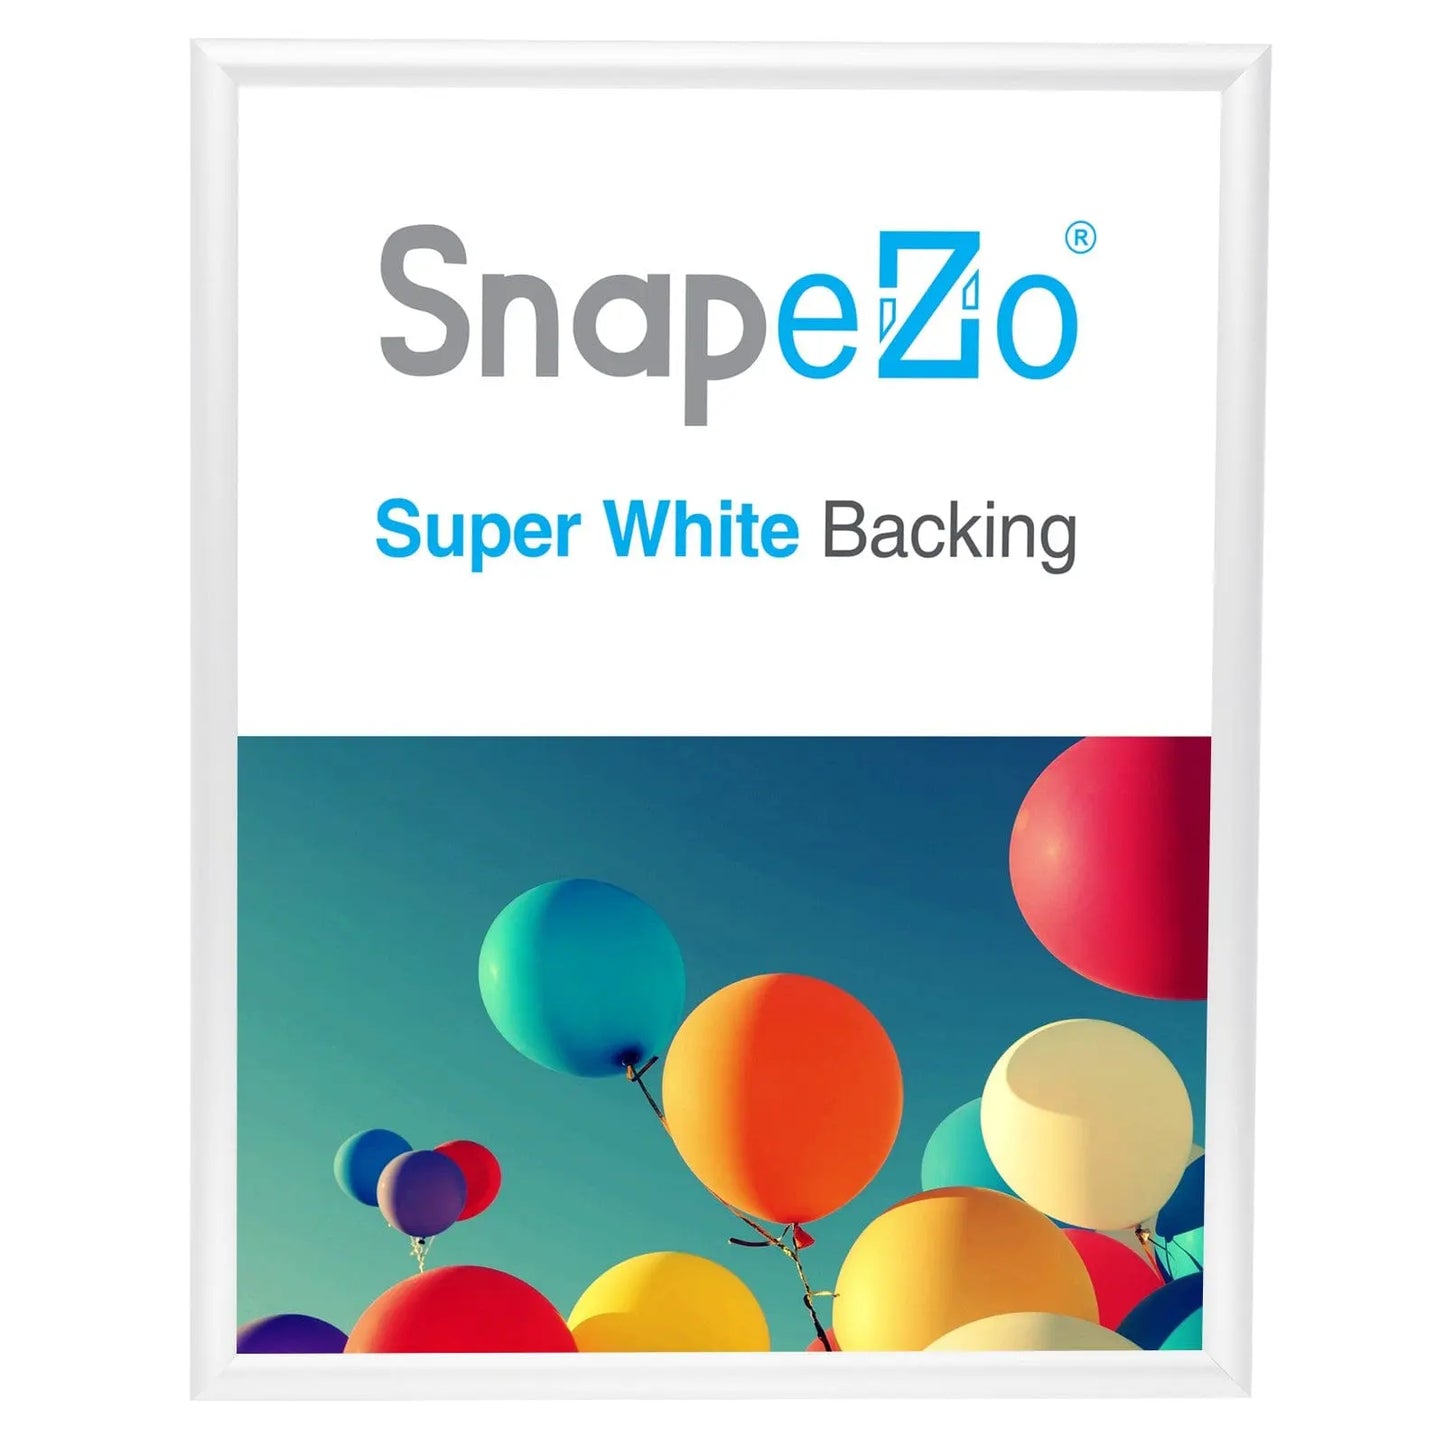 18x24 White SnapeZo® Snap Frame - 1" Profile - Snap Frames Direct